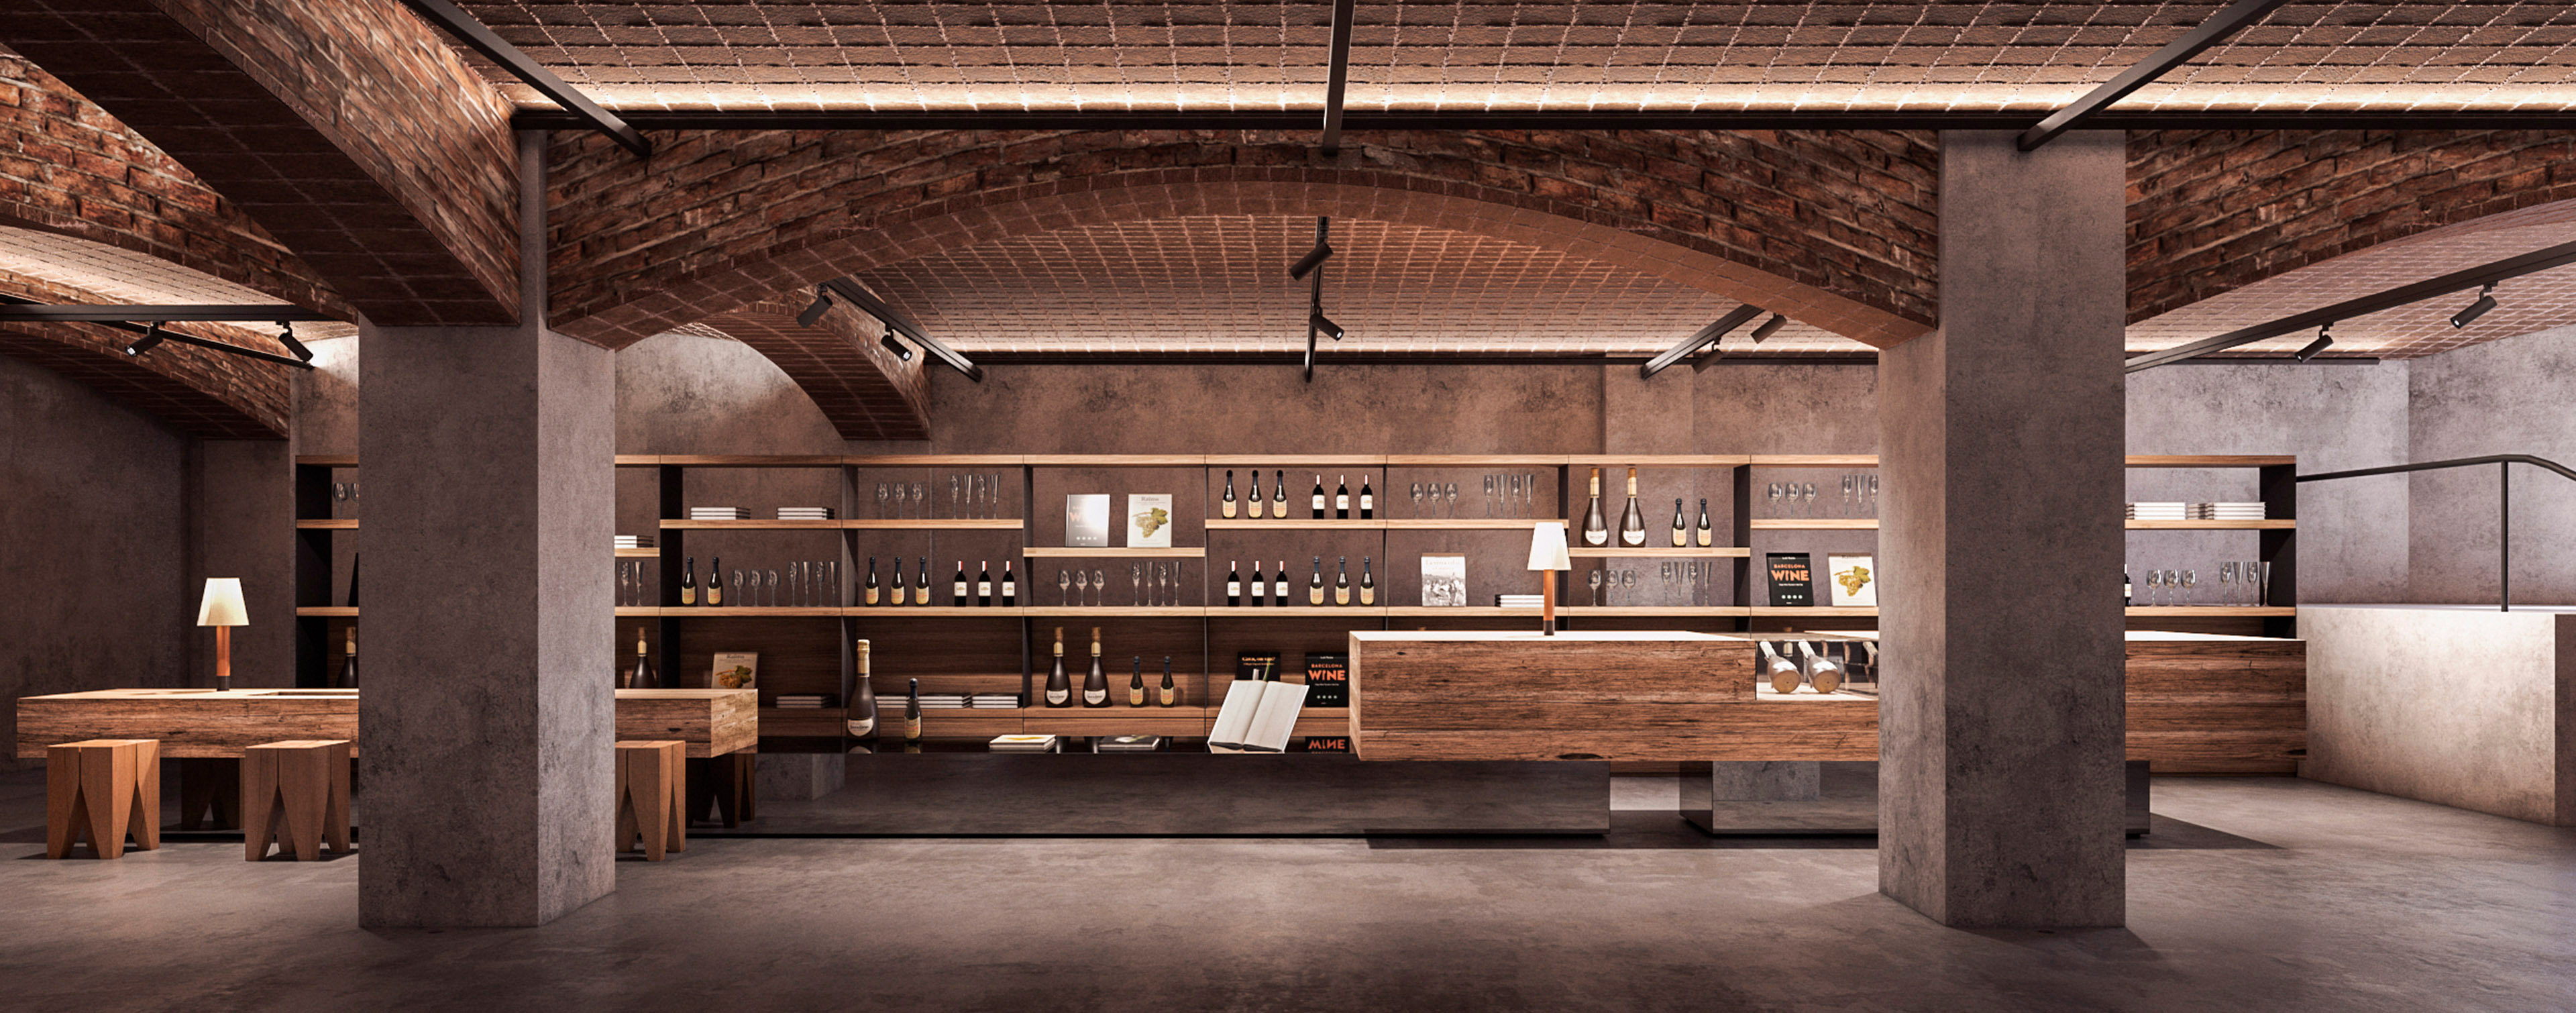 luv studio luxury architects santsadurni juve y camps winery IMG 01 - LUV Studio - Arquitectura y diseño - Barcelona